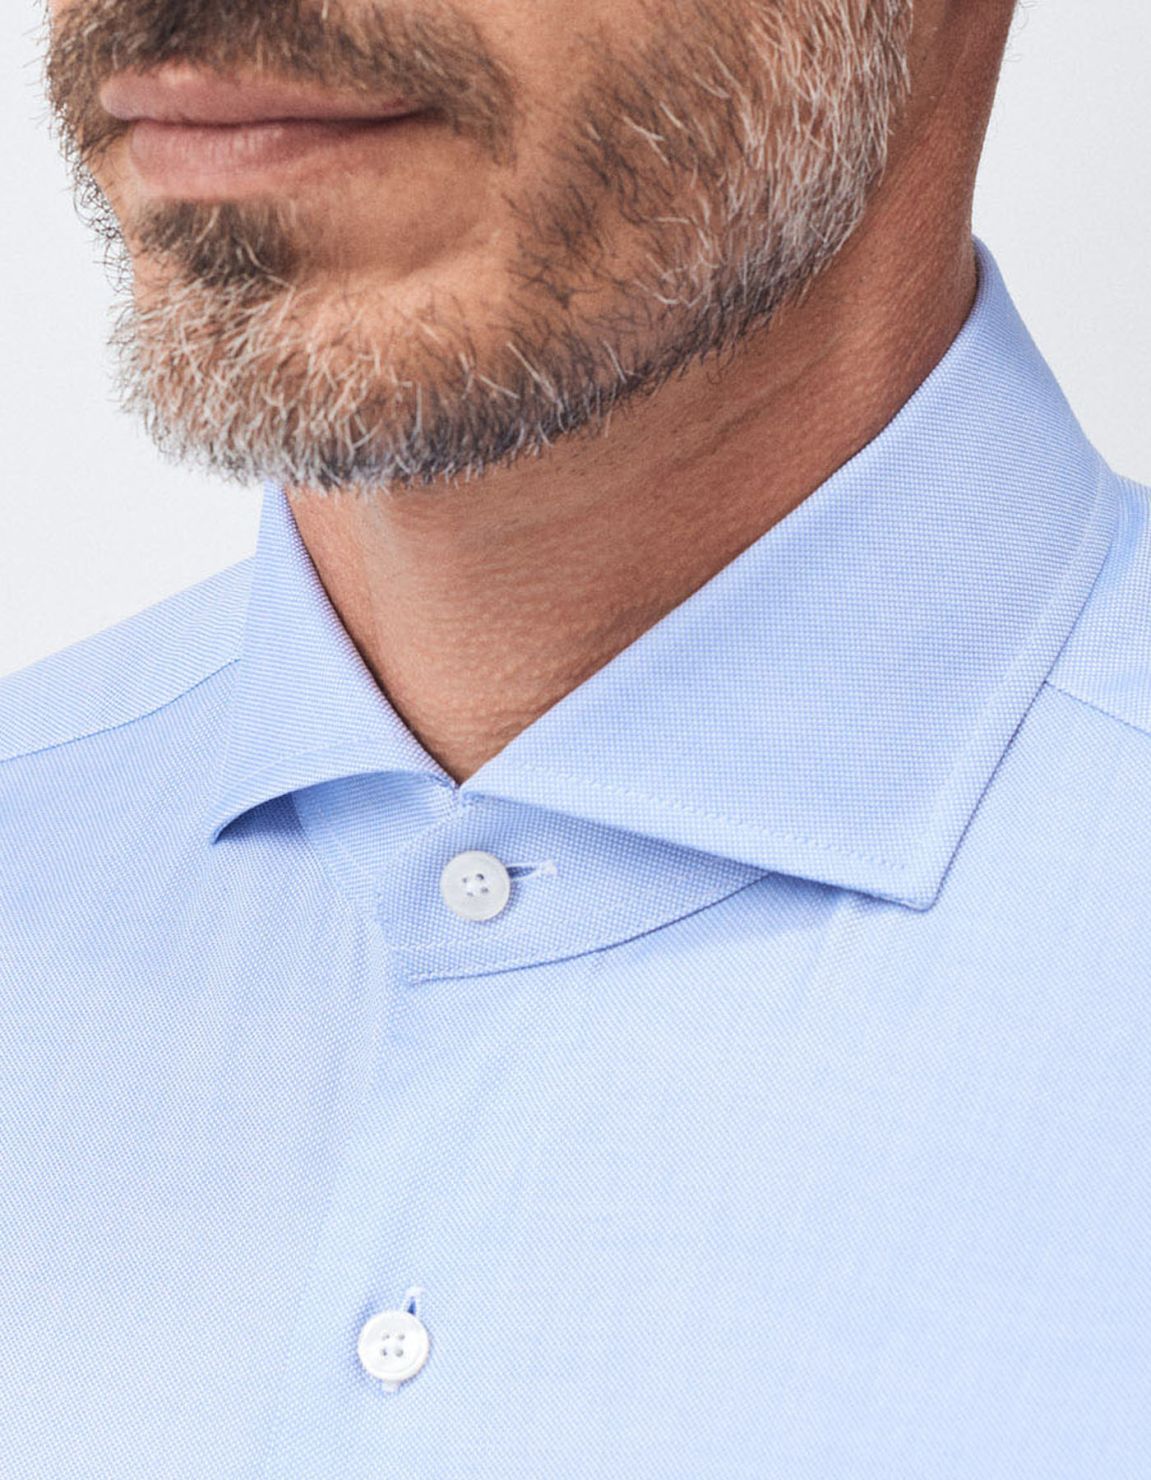 Shirt Collar cutaway Light Blue Oxford Tailor Custom Fit 3